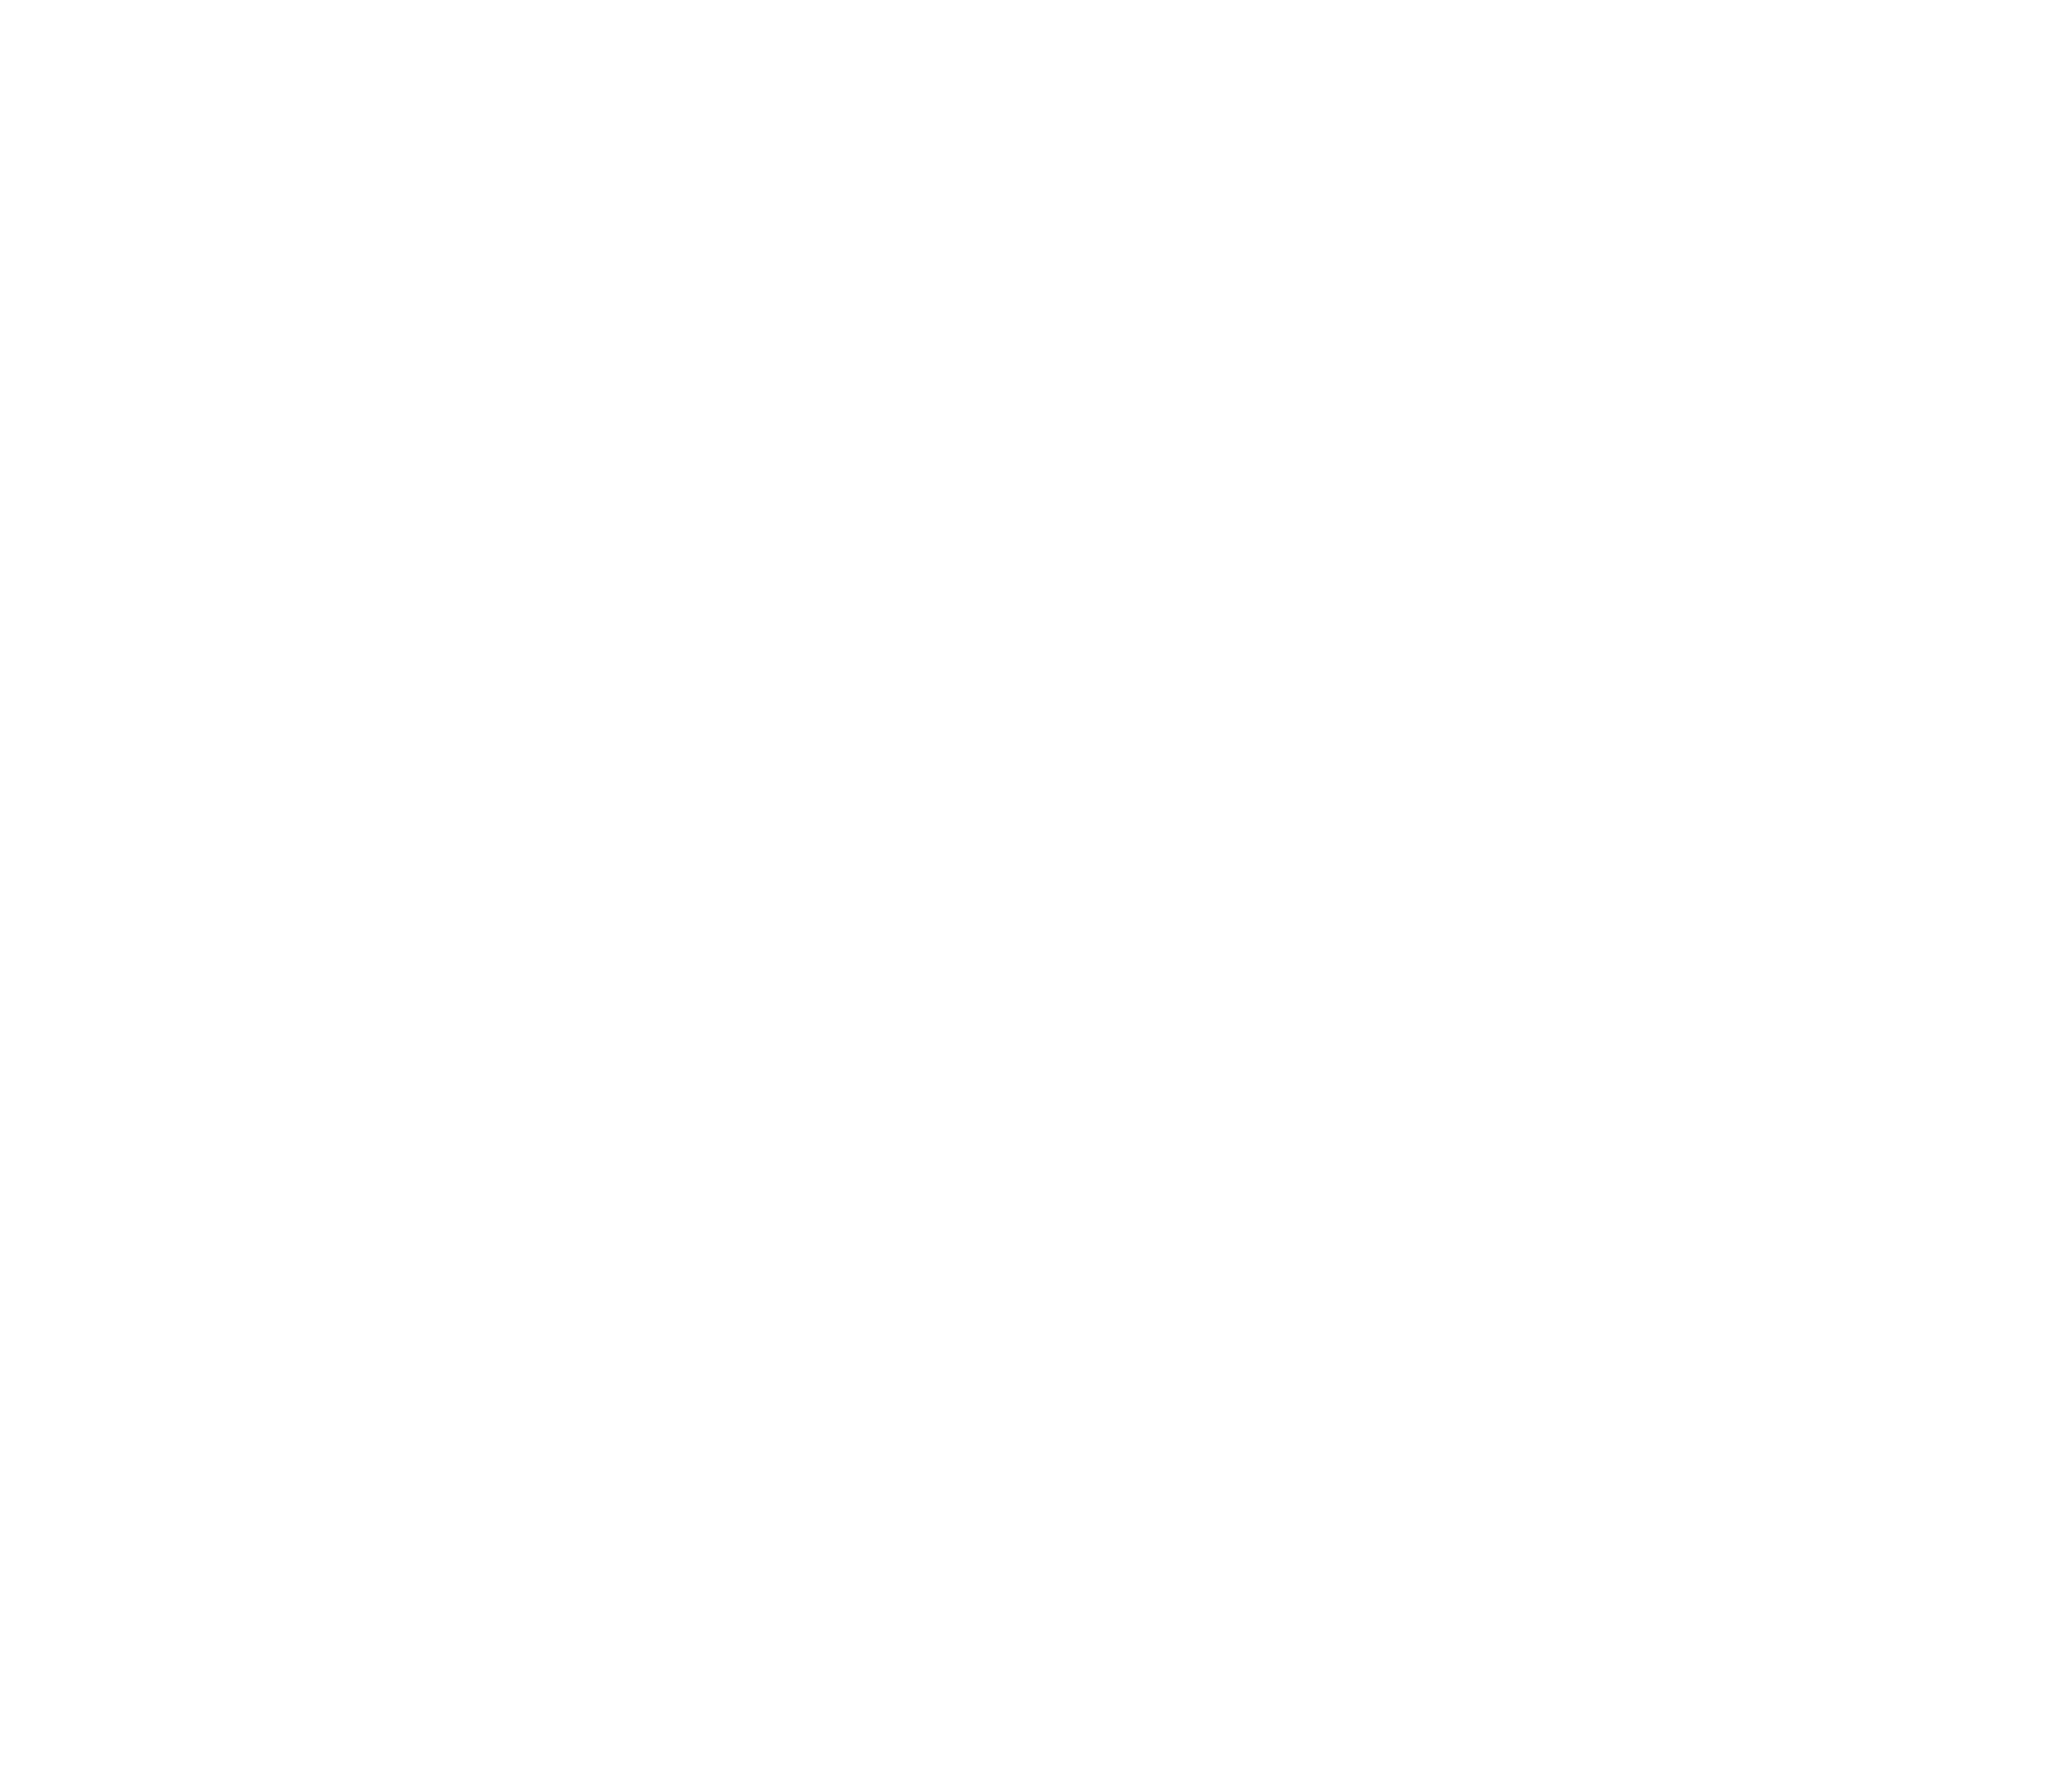 Bob Boldt Hvac